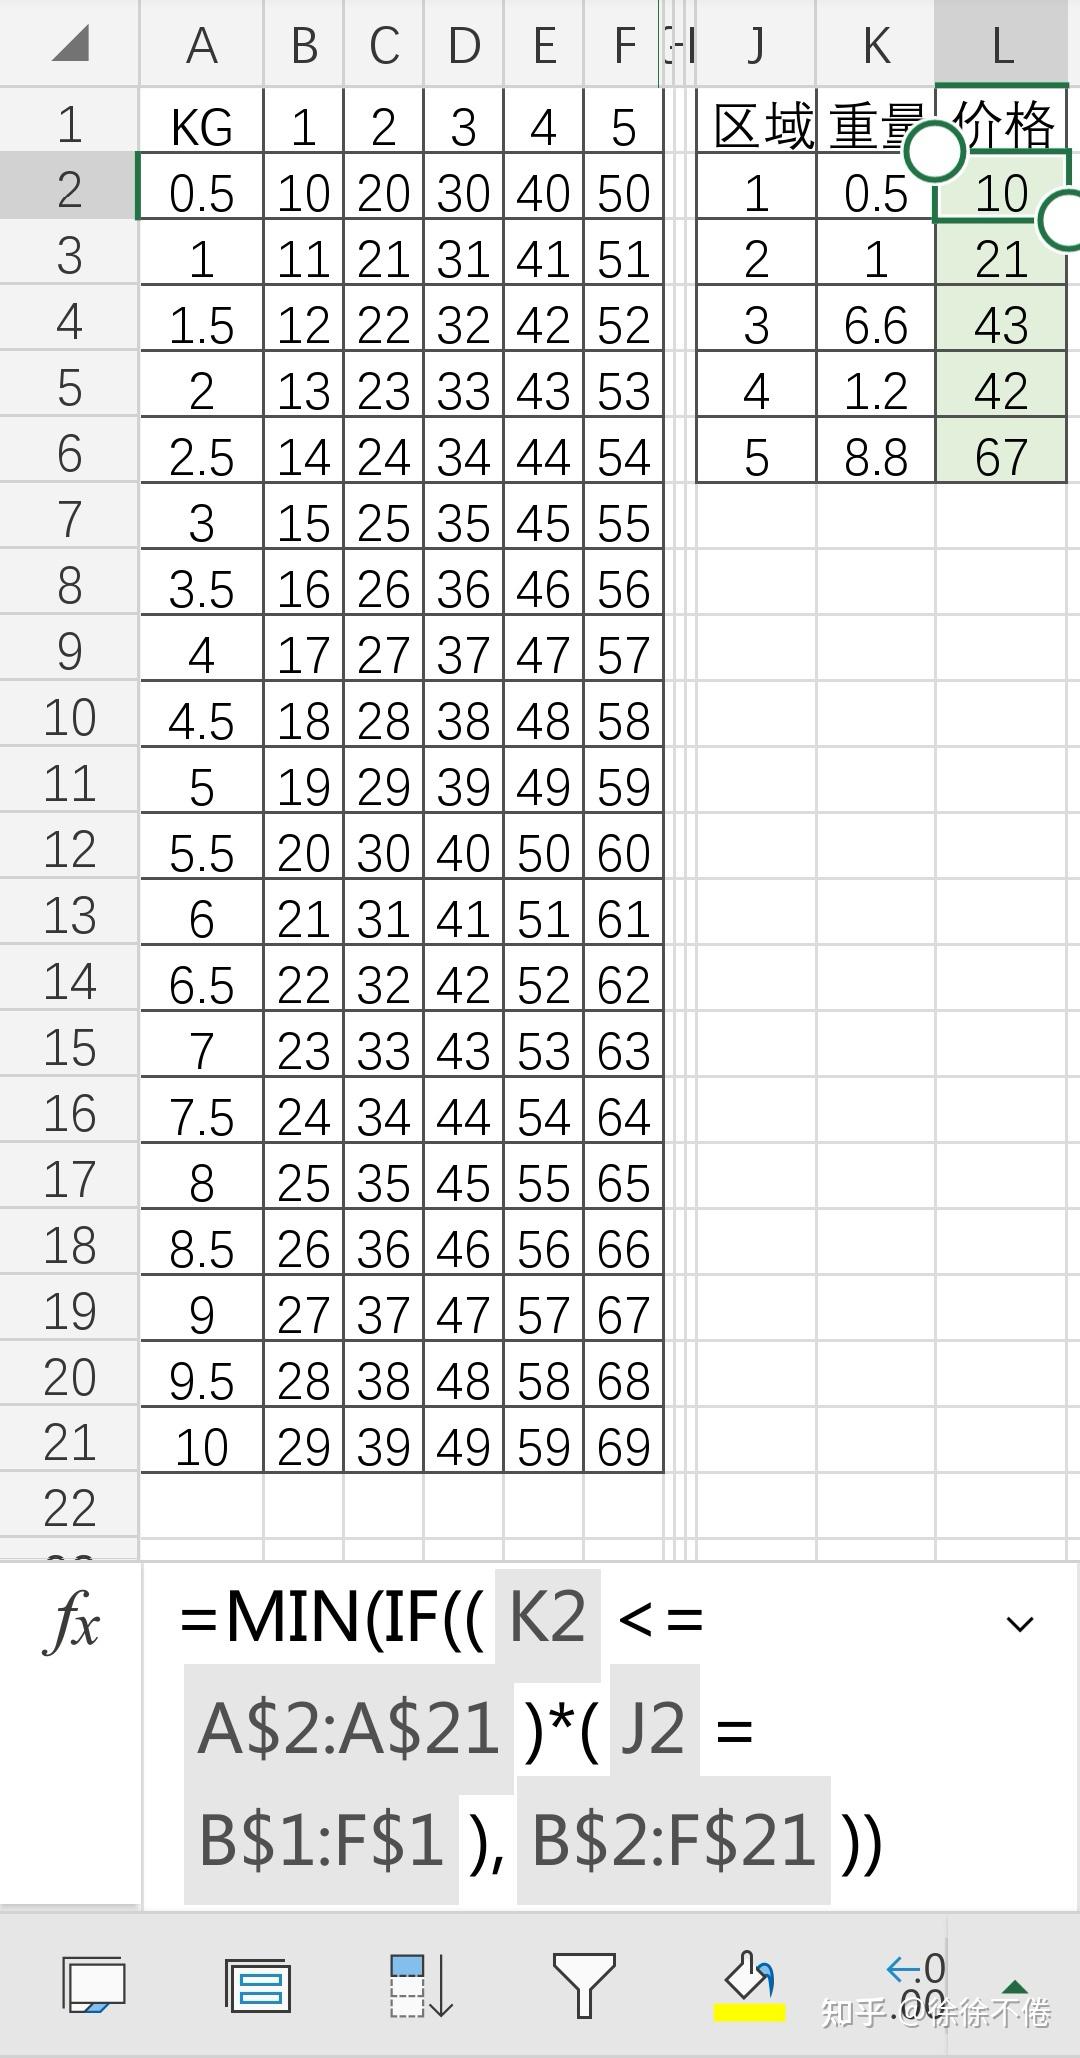 hdu_oj1213How Many Tables(并查集查找不同集合的个数) - CodeAntenna